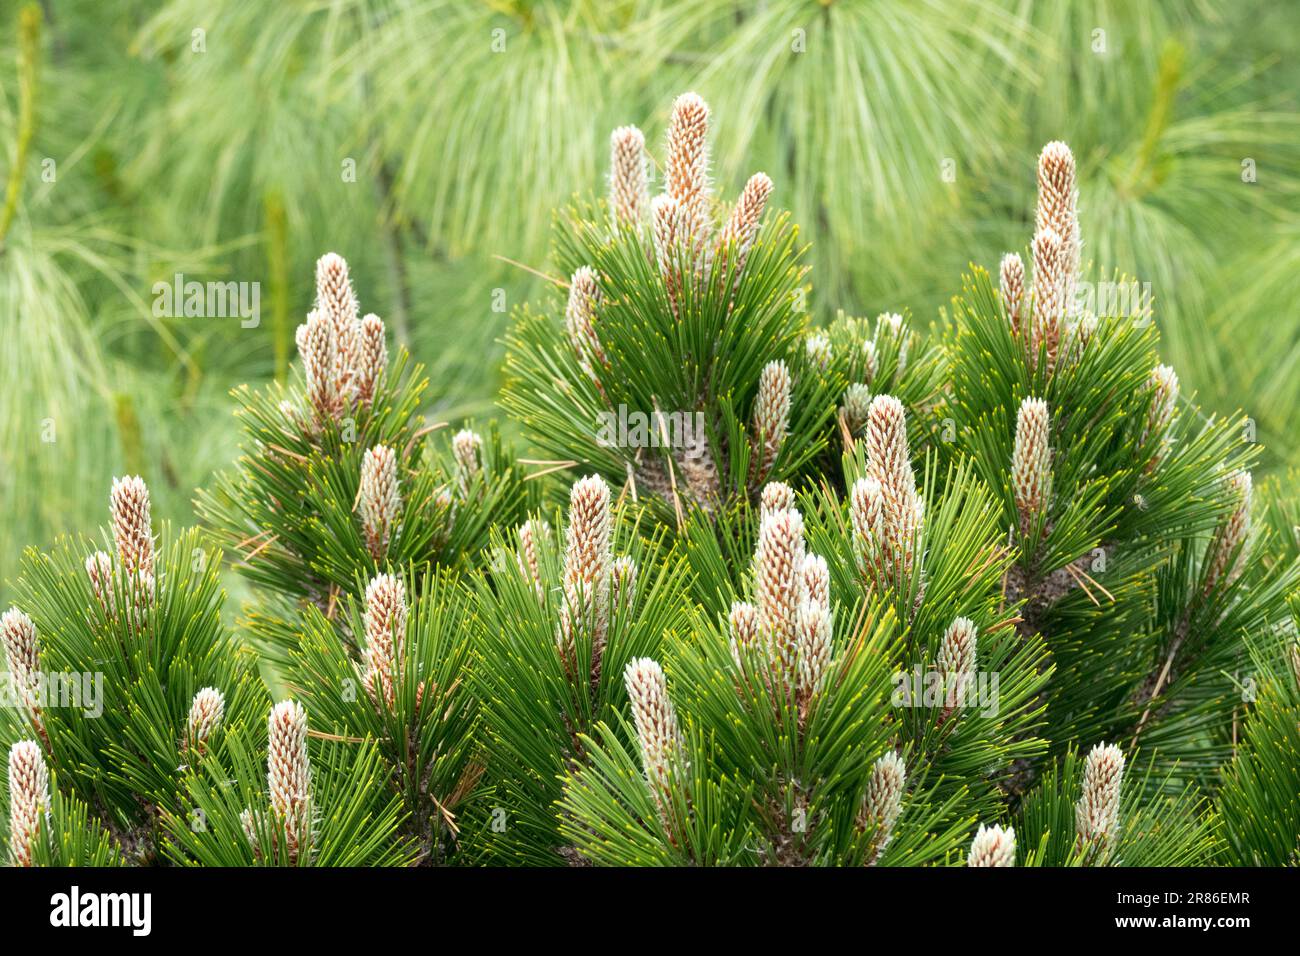 Bosnian Pine, Pinus heldreichii "Karmel" Stock Photo